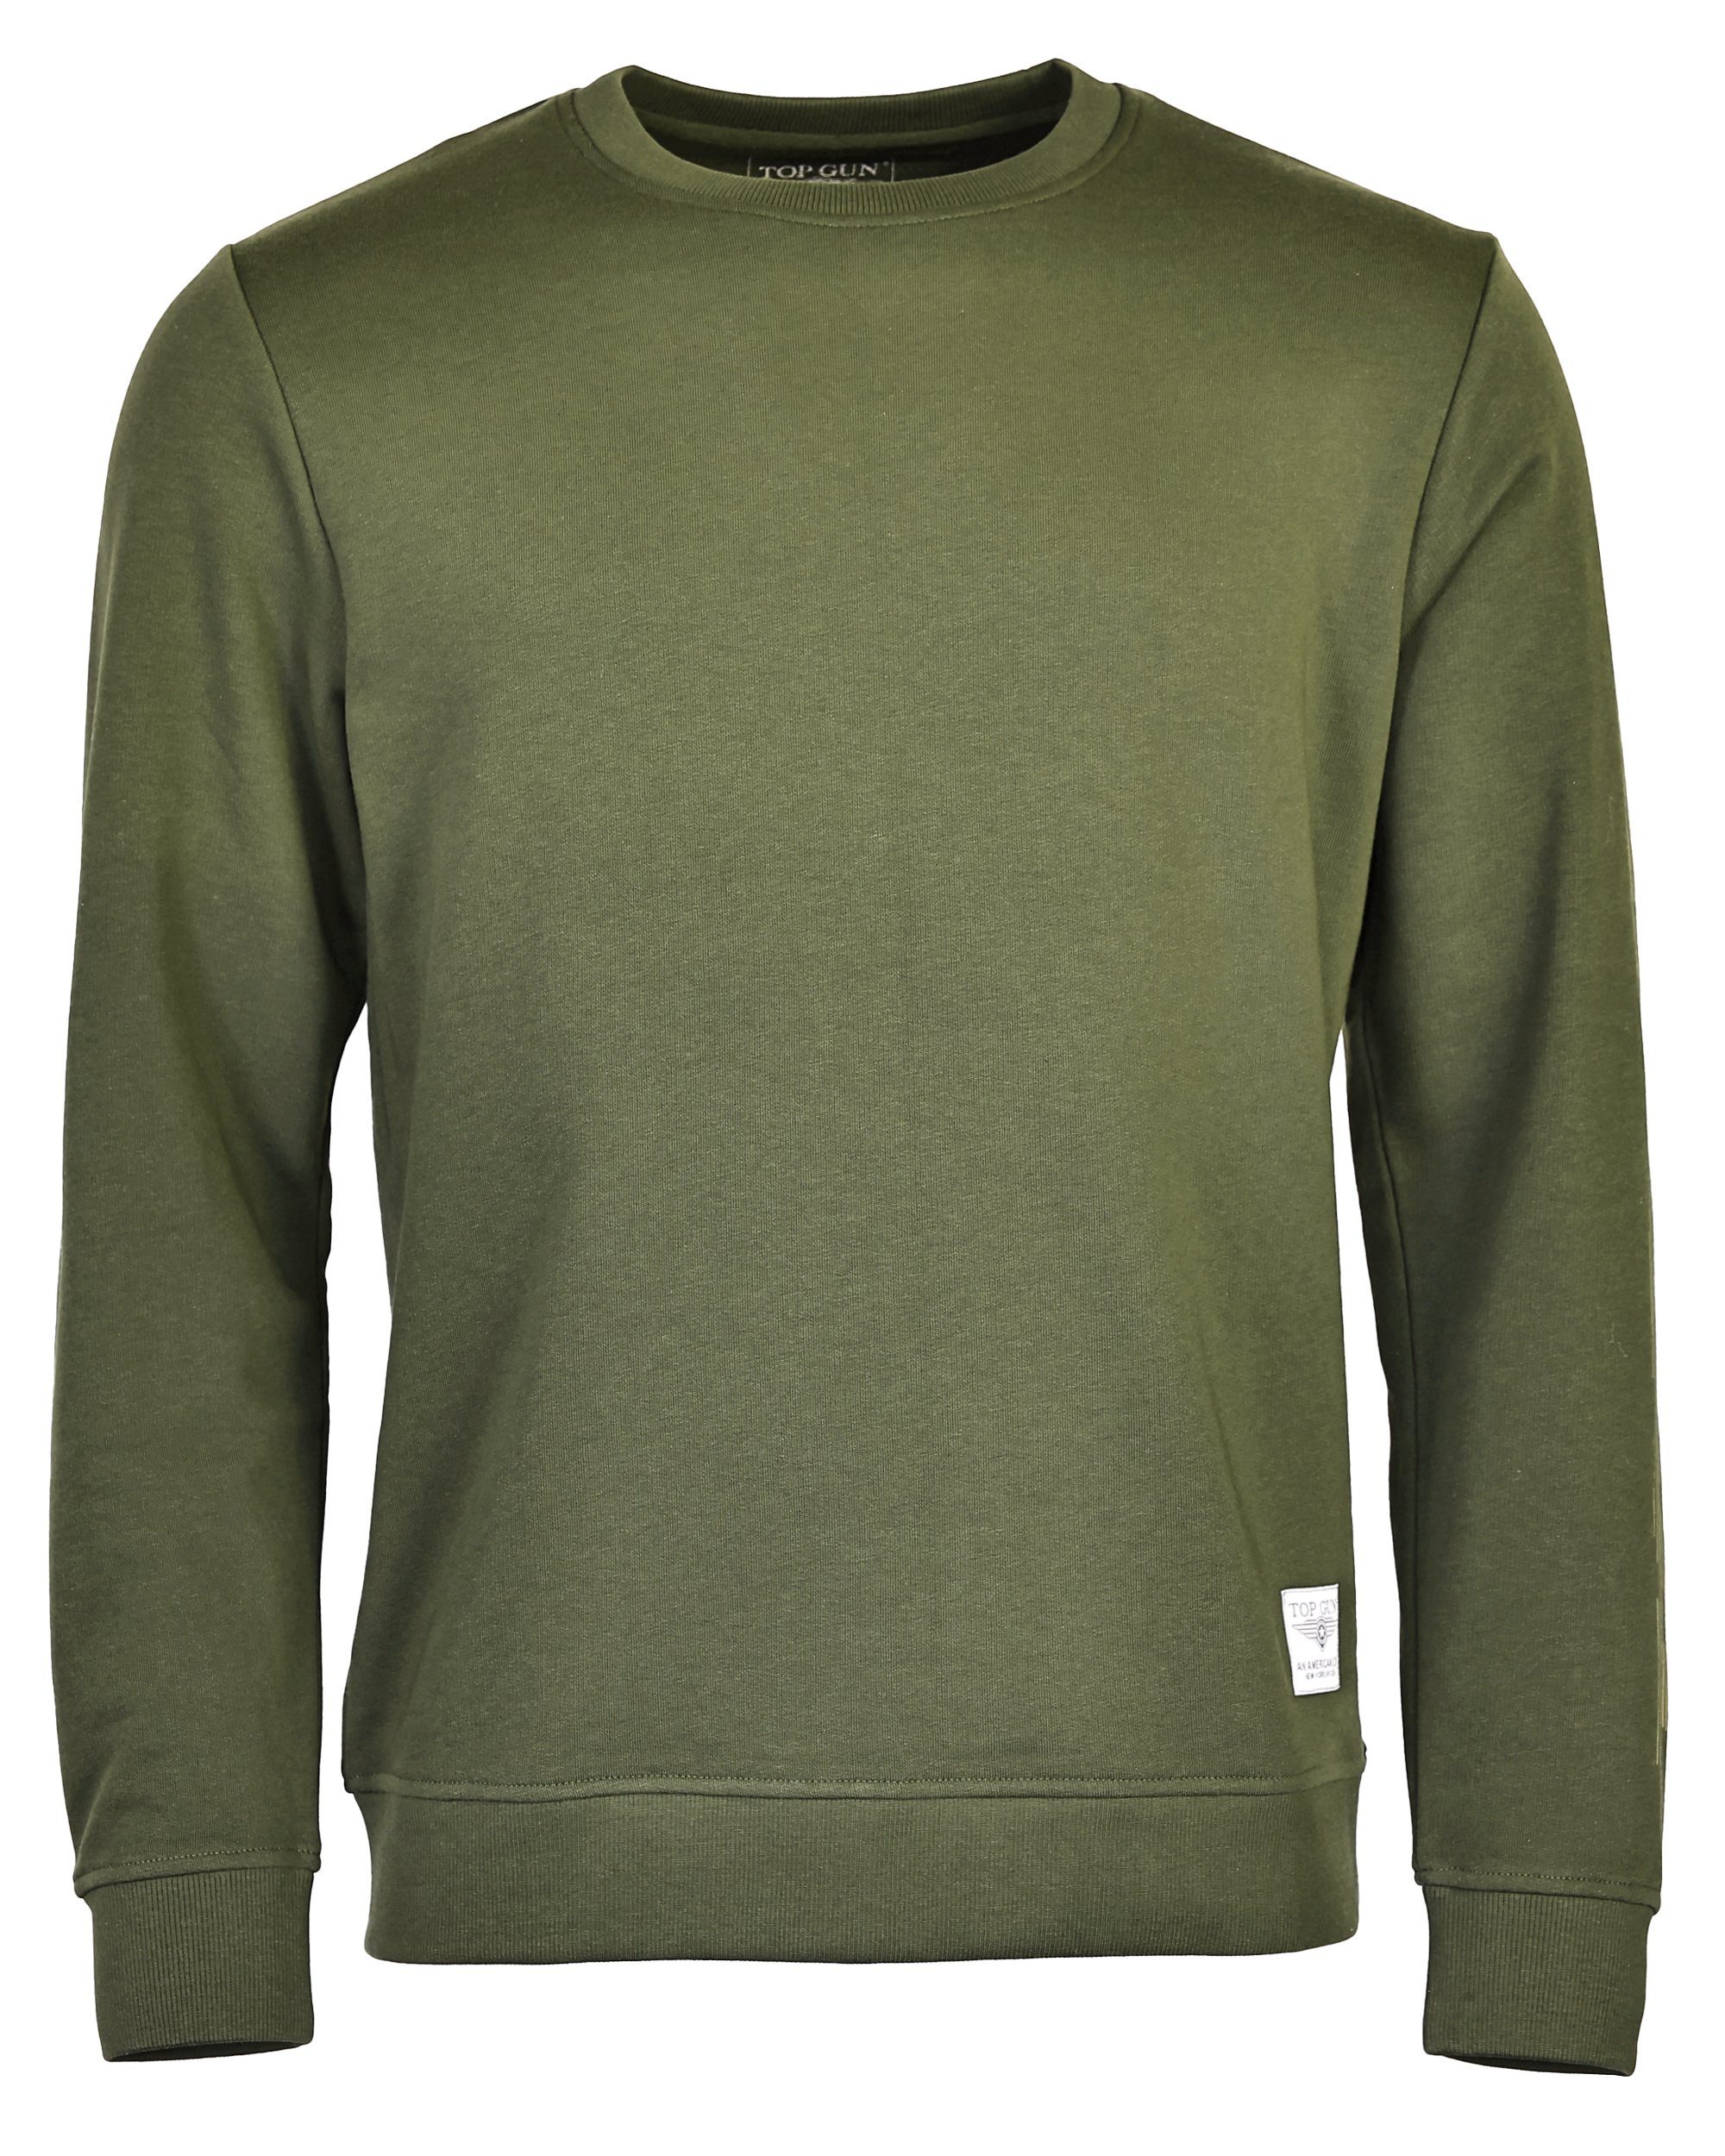 TOP GUN Sweater TG22008 olive